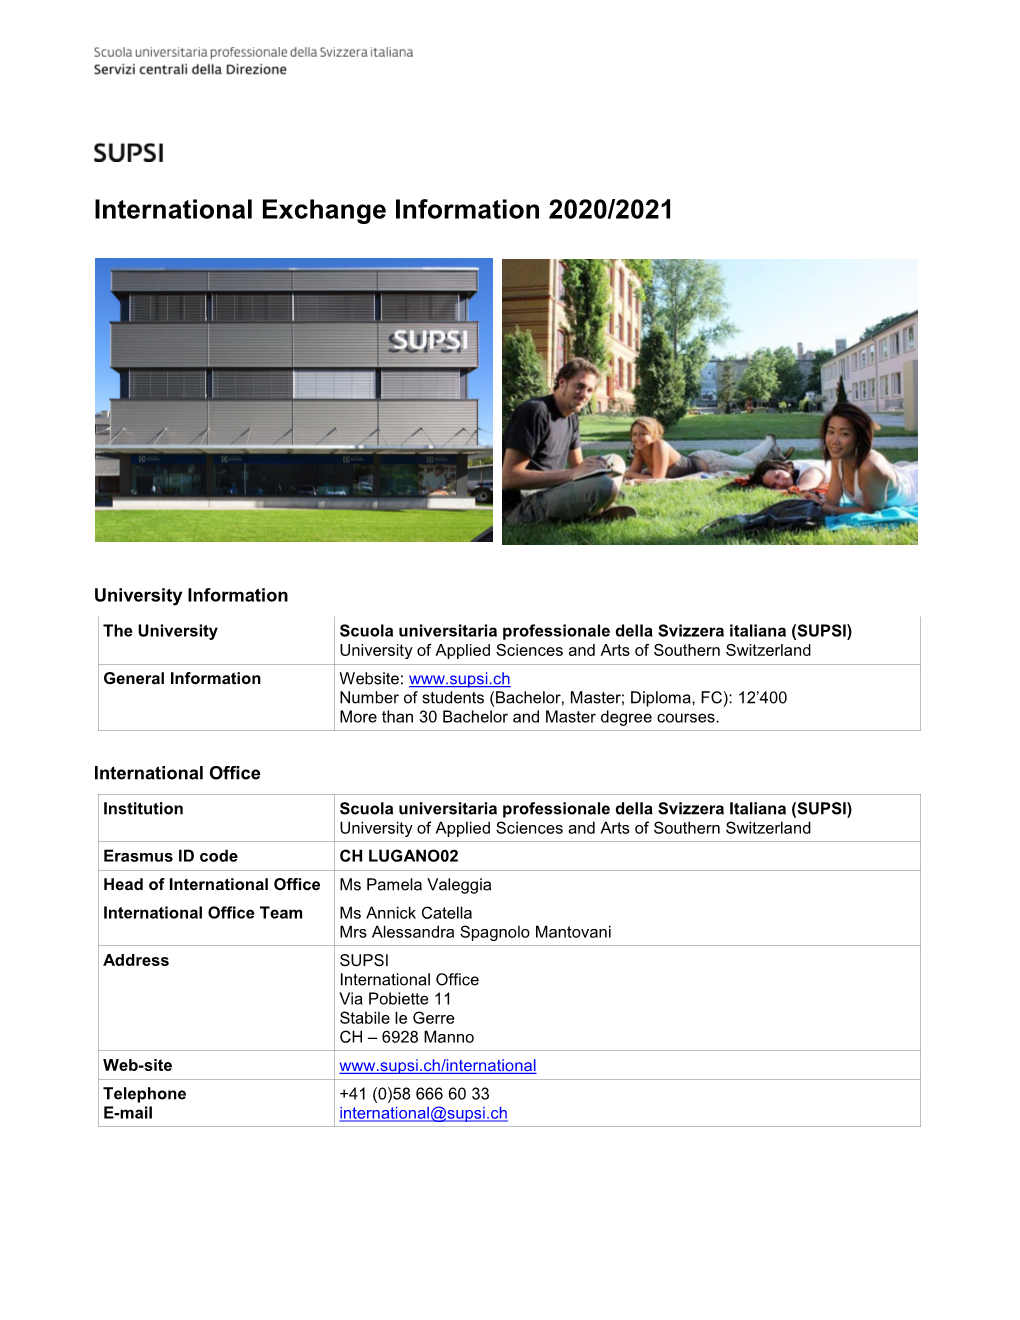 International Exchange Information 2020/2021